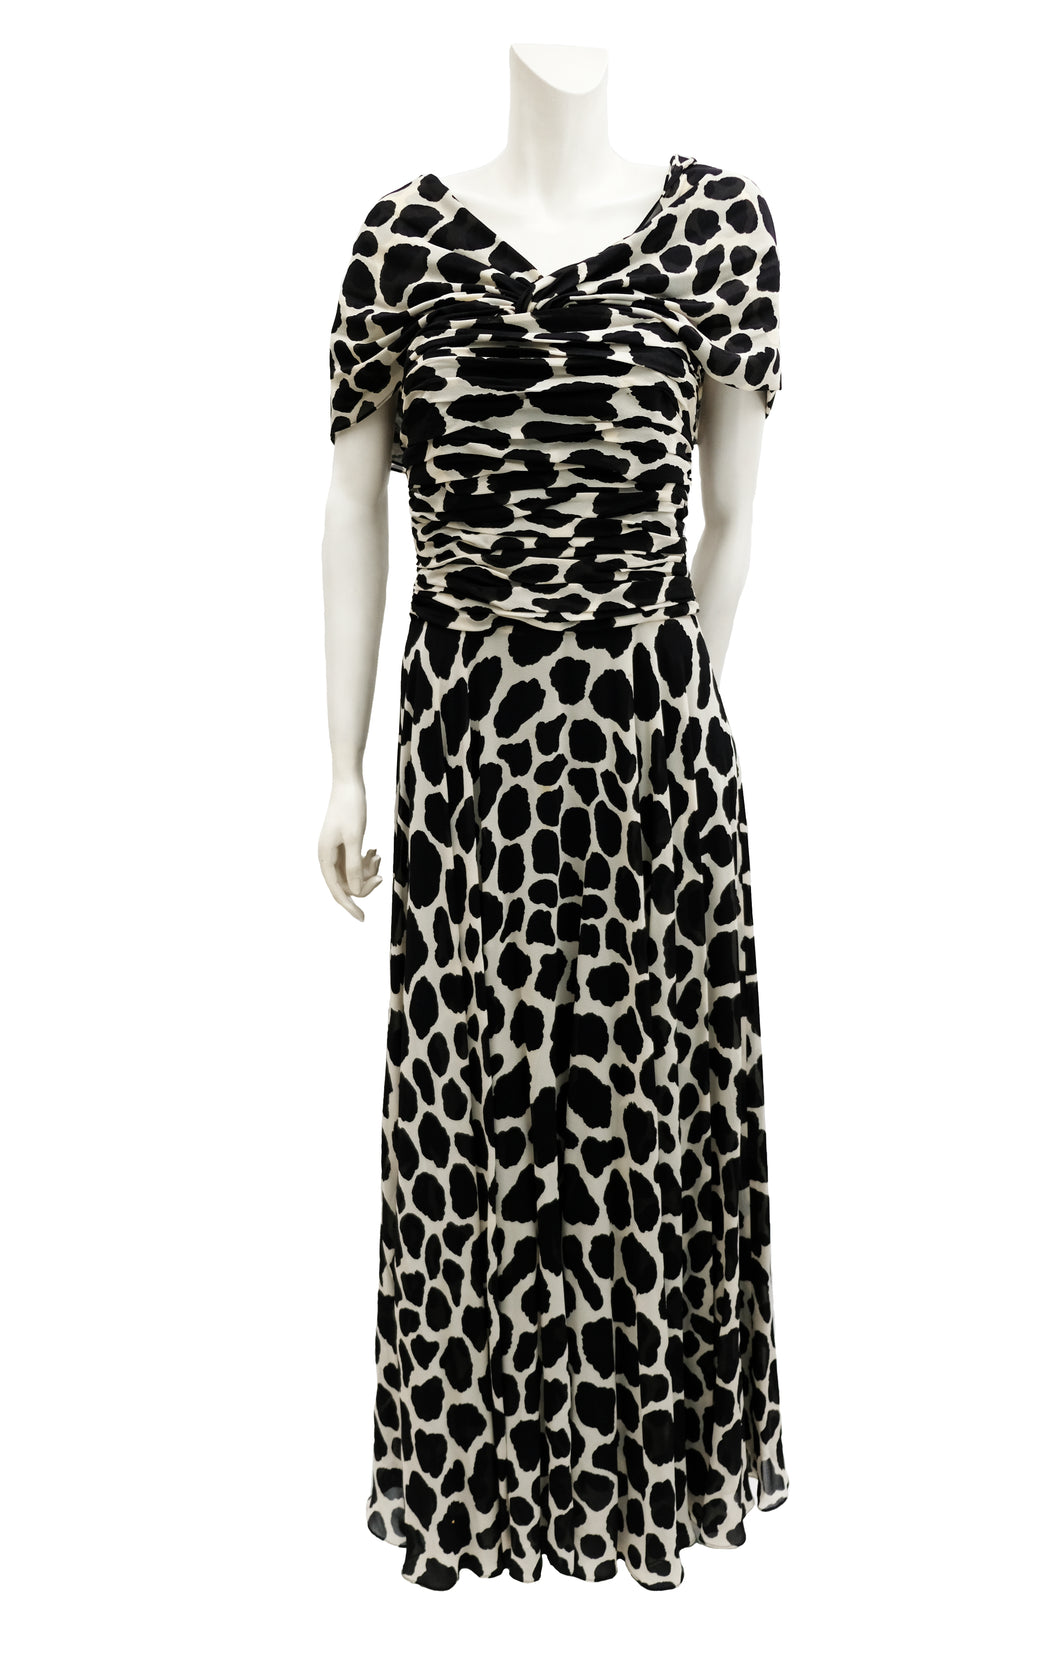 Louis Féraud Vintage Black and White Chiffon Evening Dress, UK10